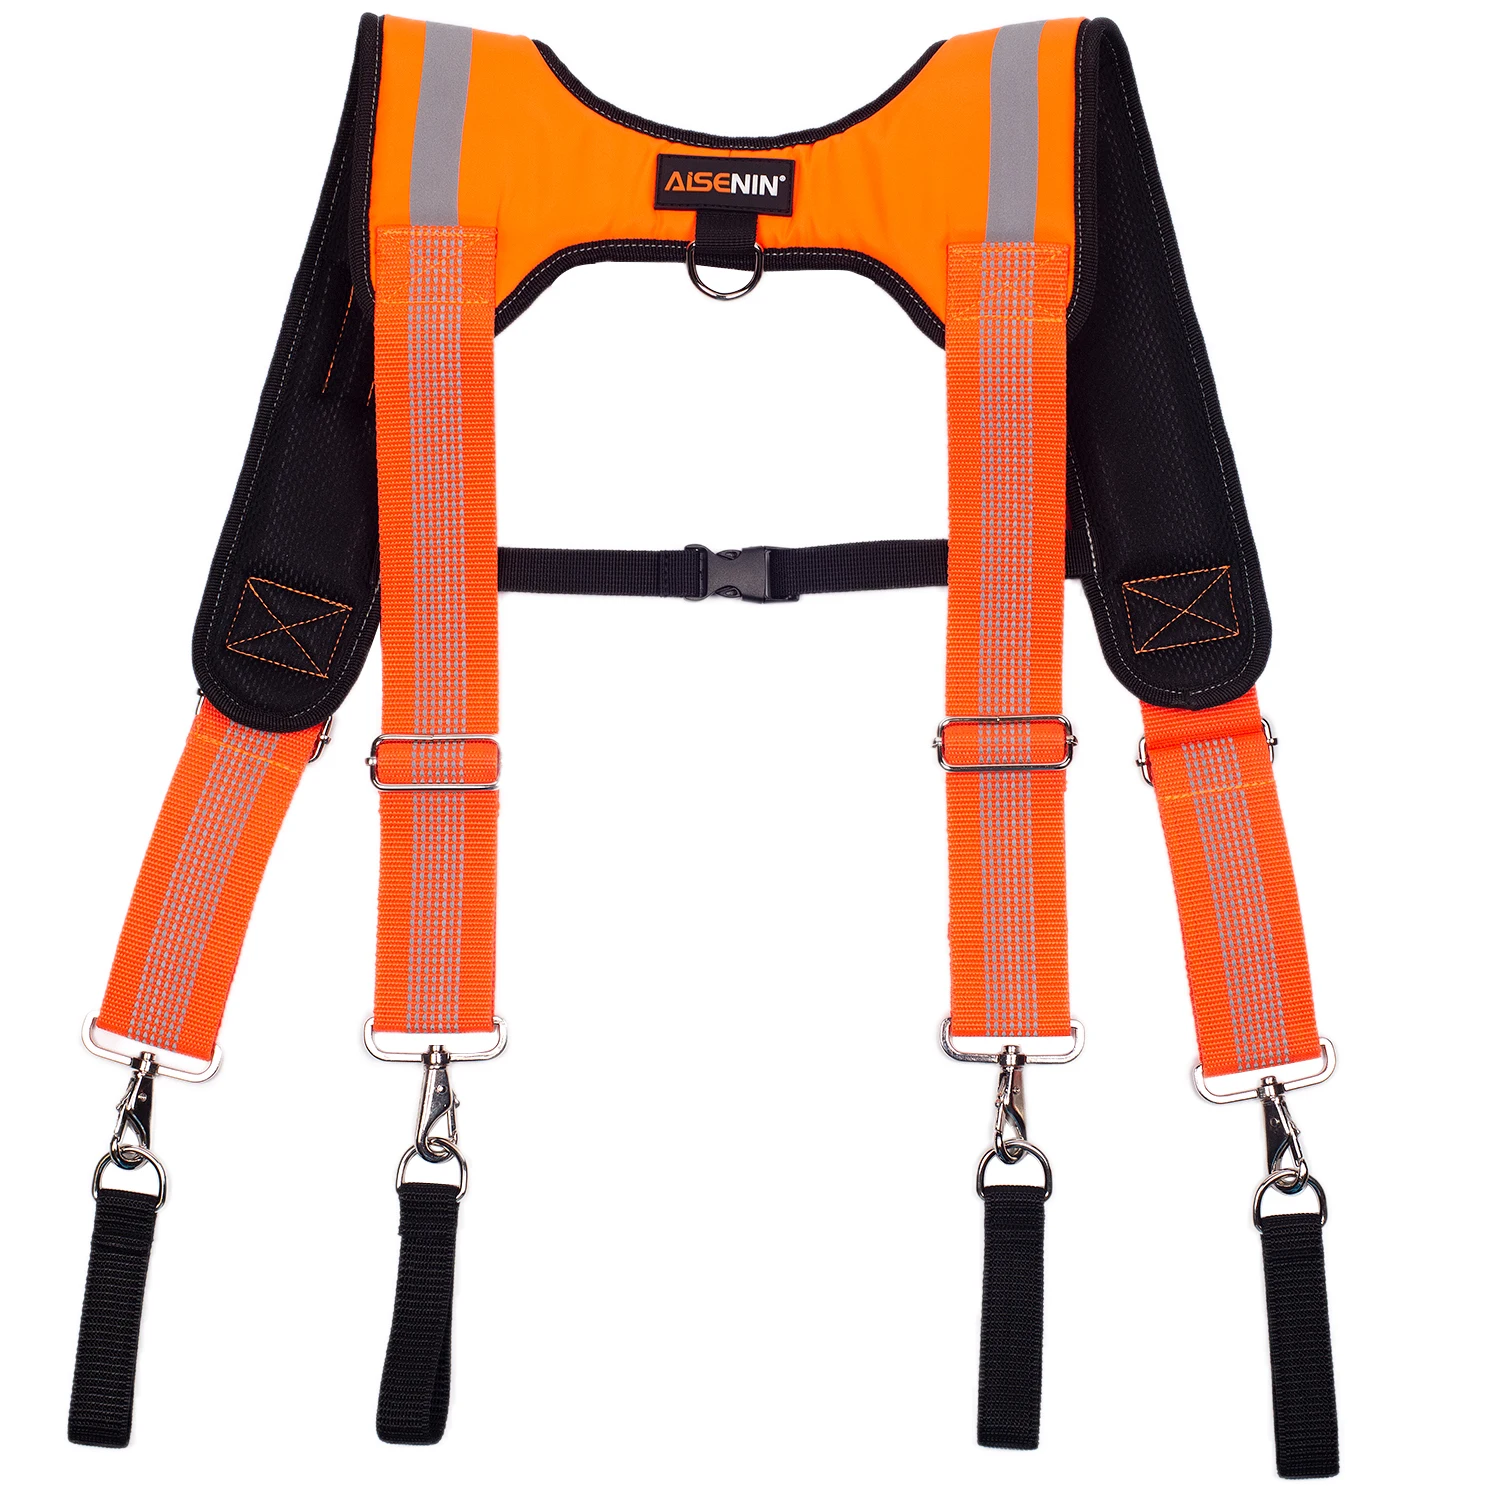 Reflective Safety Suspenders|Work Suspenders with Hi Viz Reflective Strip Hold Up Tool Belt Suspenders 